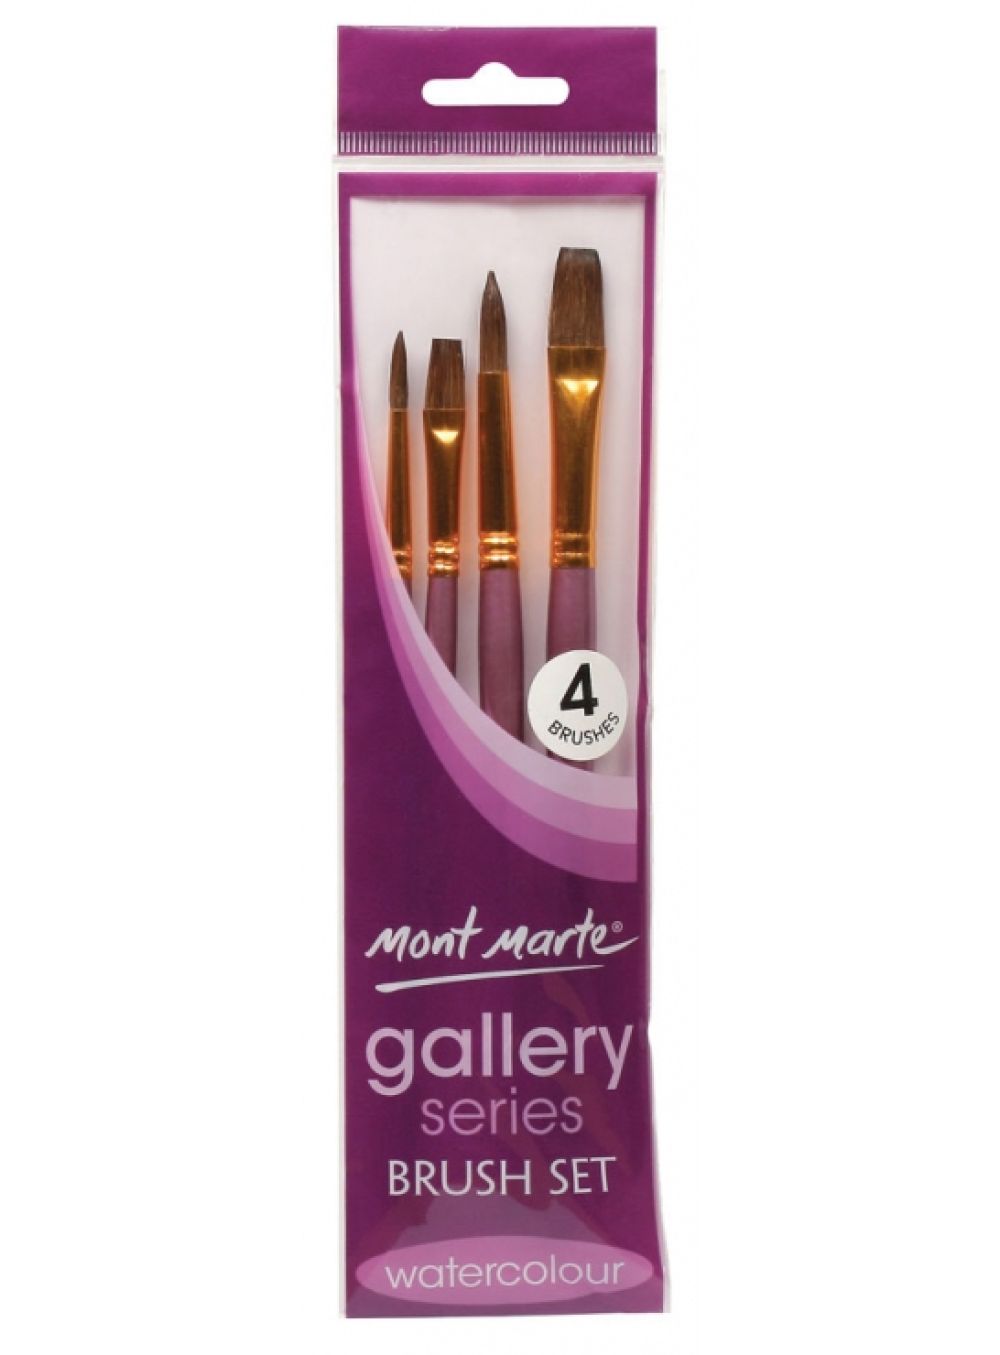 Mont Marte Gallery Series Brush Set Watercolour 4pc - 28